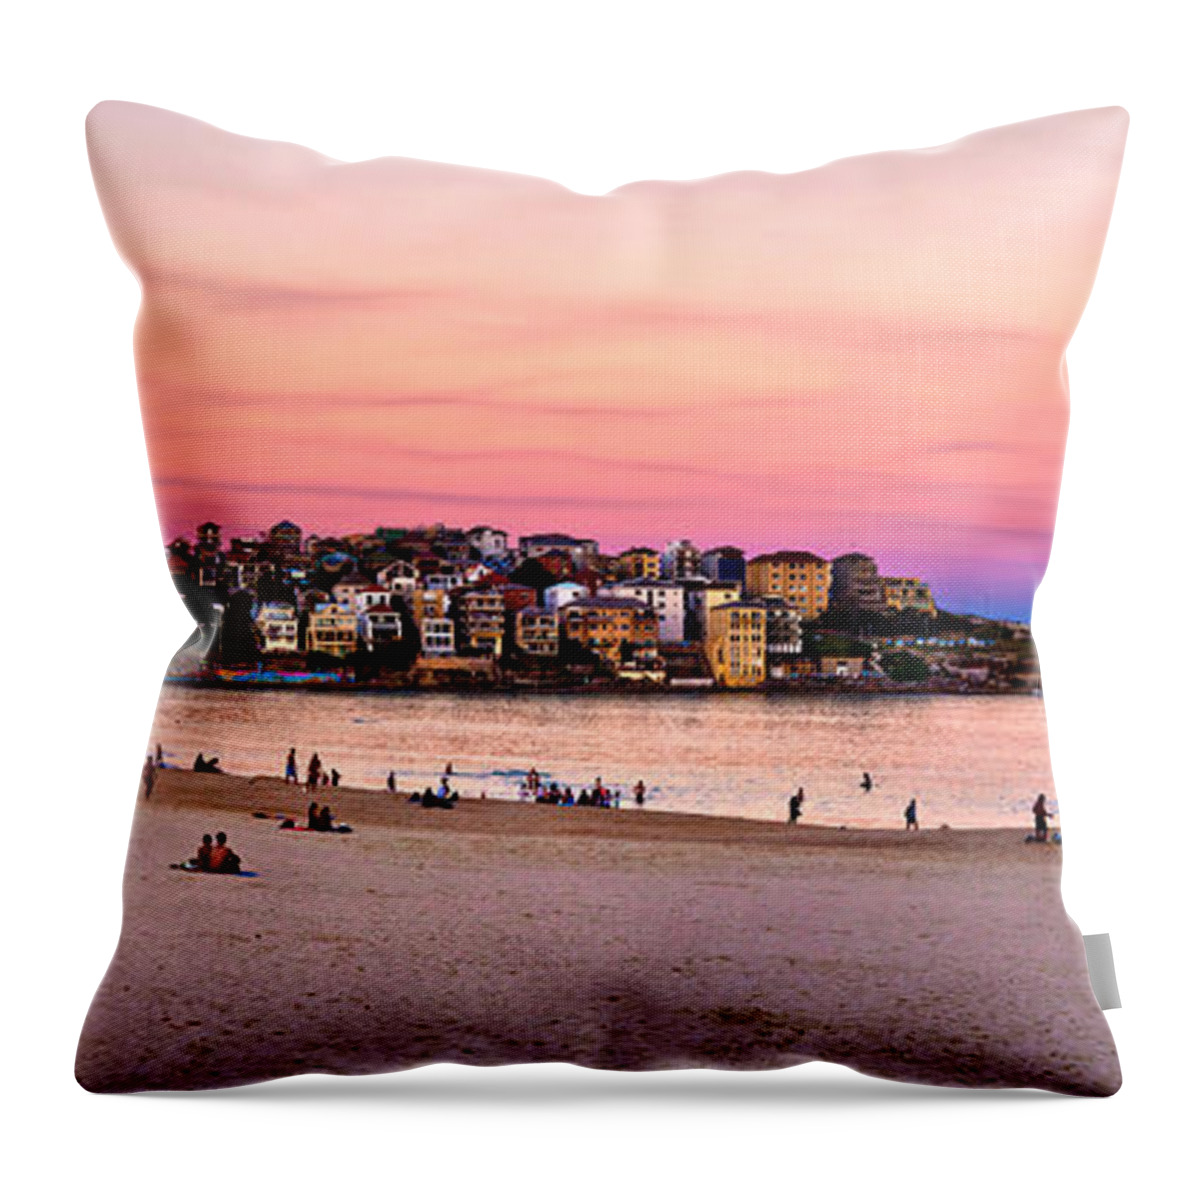 Sydney Throw Pillow featuring the photograph Winter Sunset Over Bondi by Az Jackson